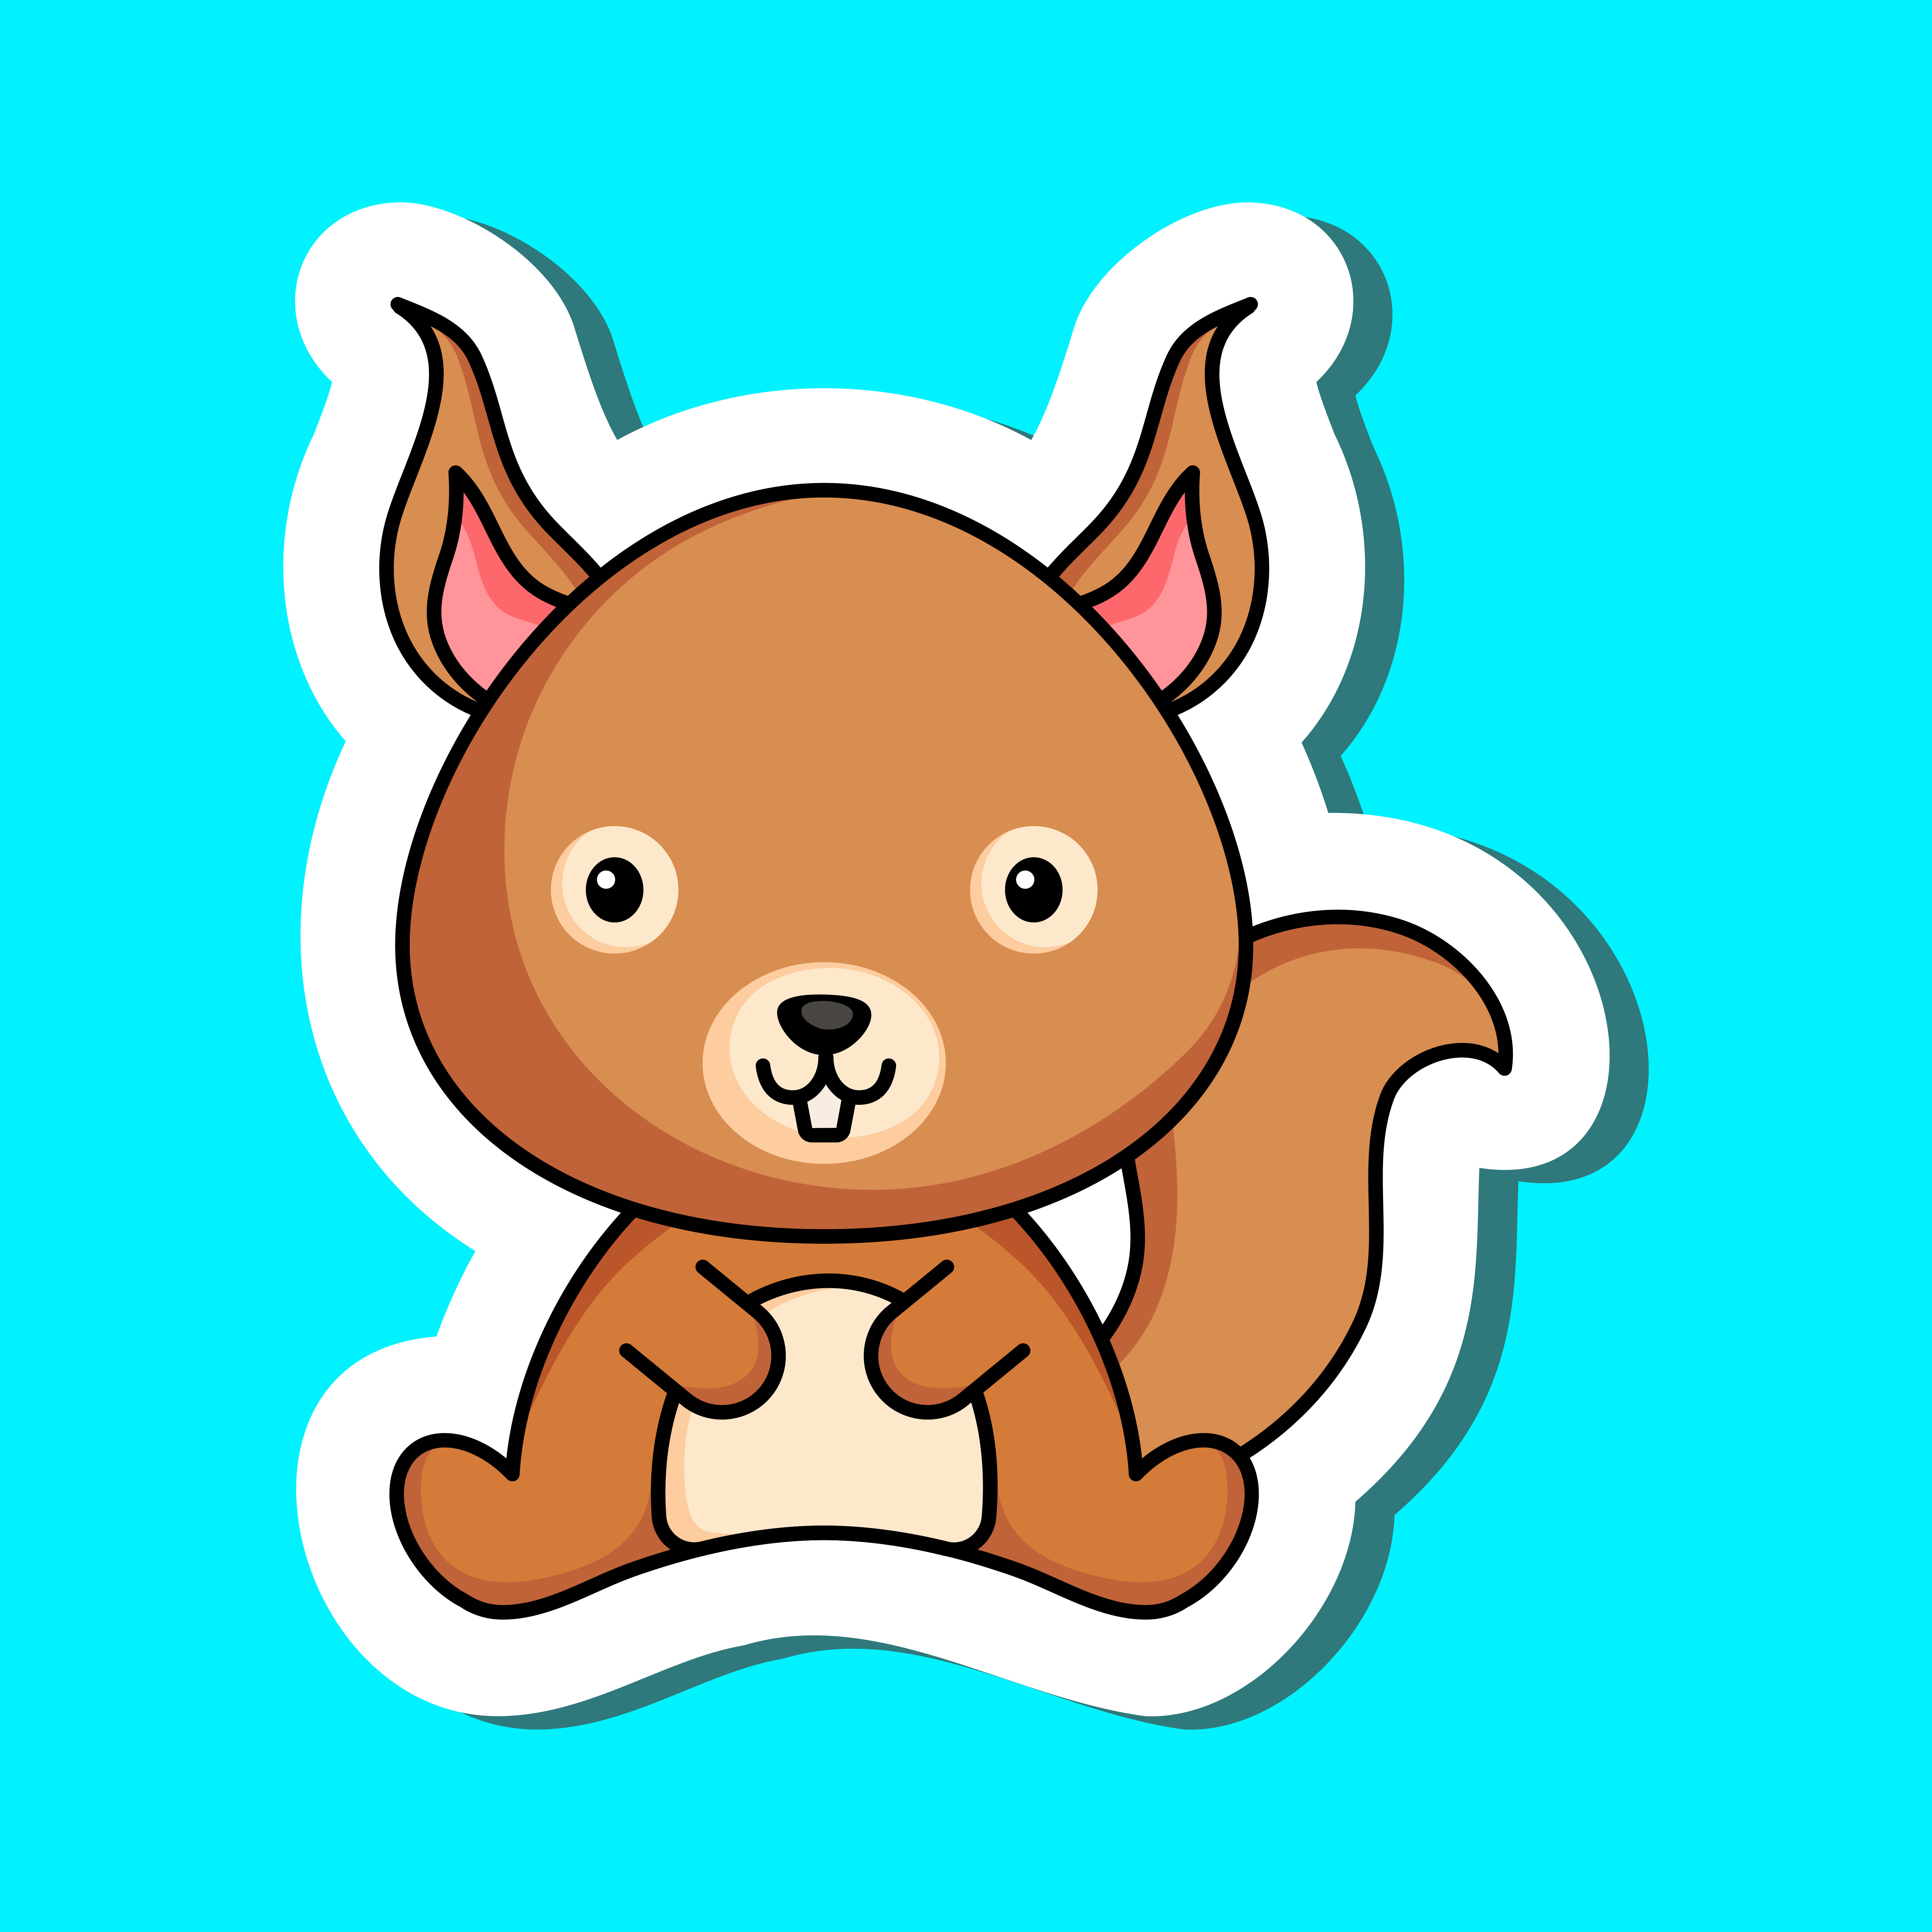 Cute cartoon sticker little squirrel logo template. Mascot animal character design of album, scrapbook, greeting card, invitation, flyer, sticker, card. Vector stock illustration.